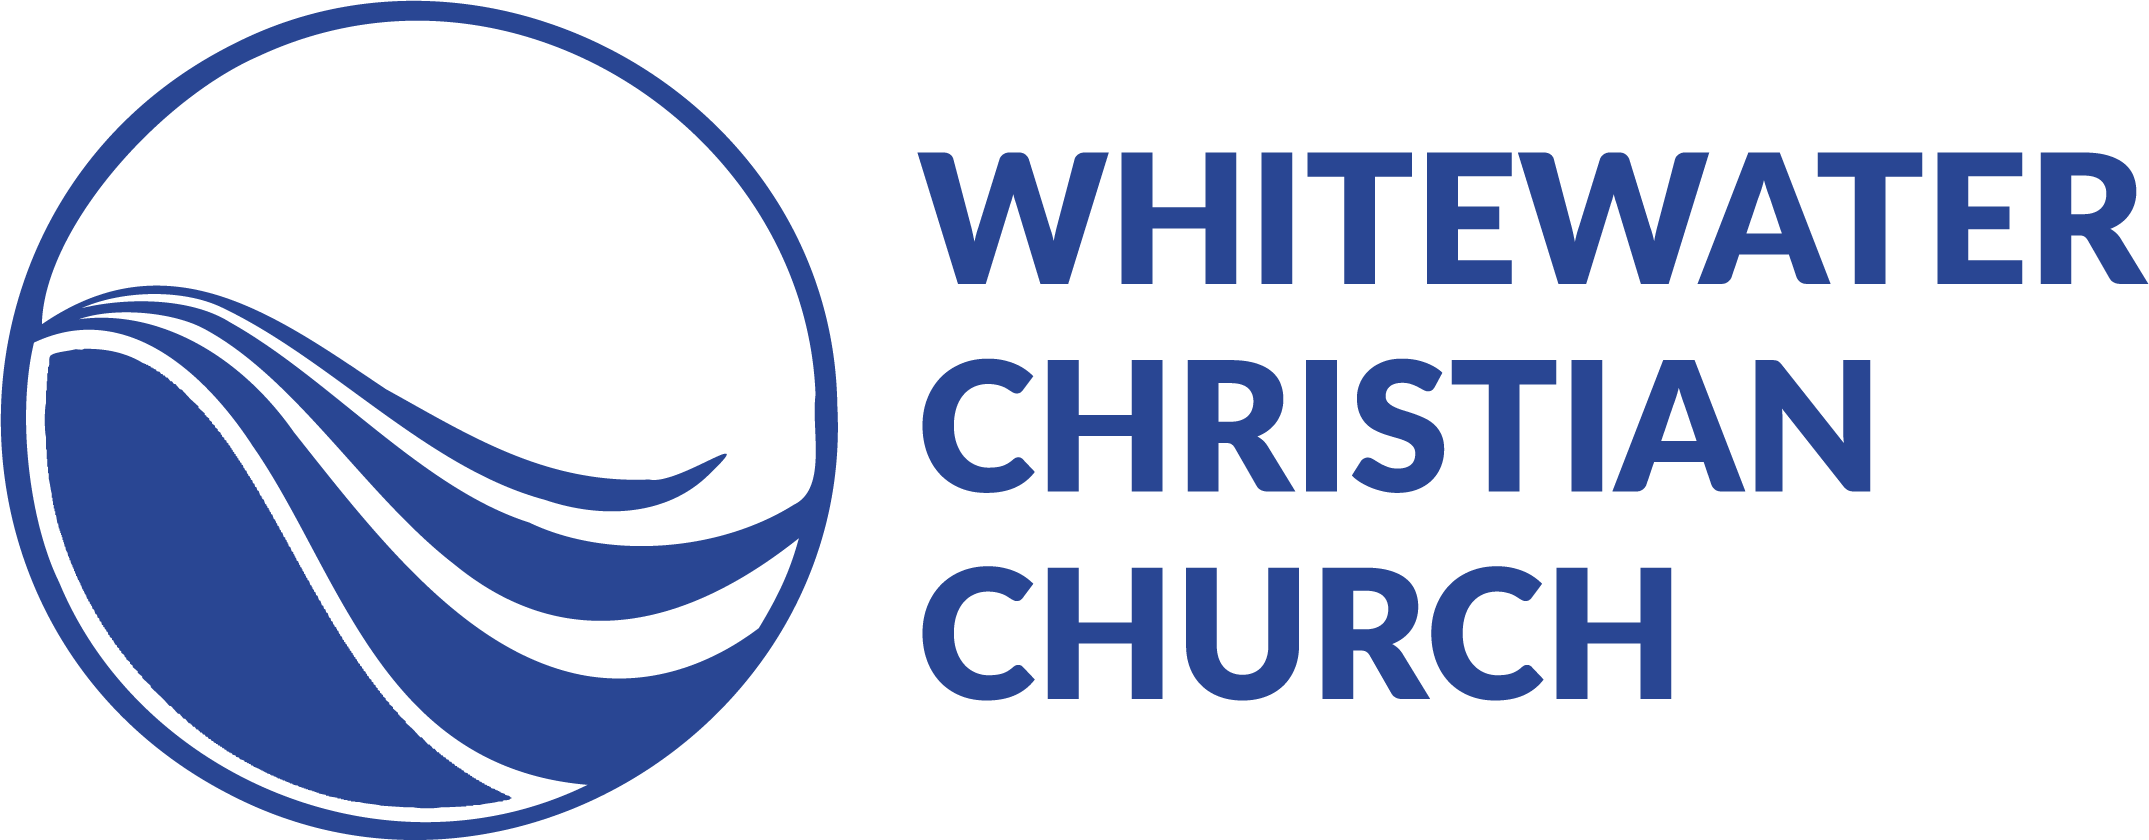 Whitewater Christian Church Logo